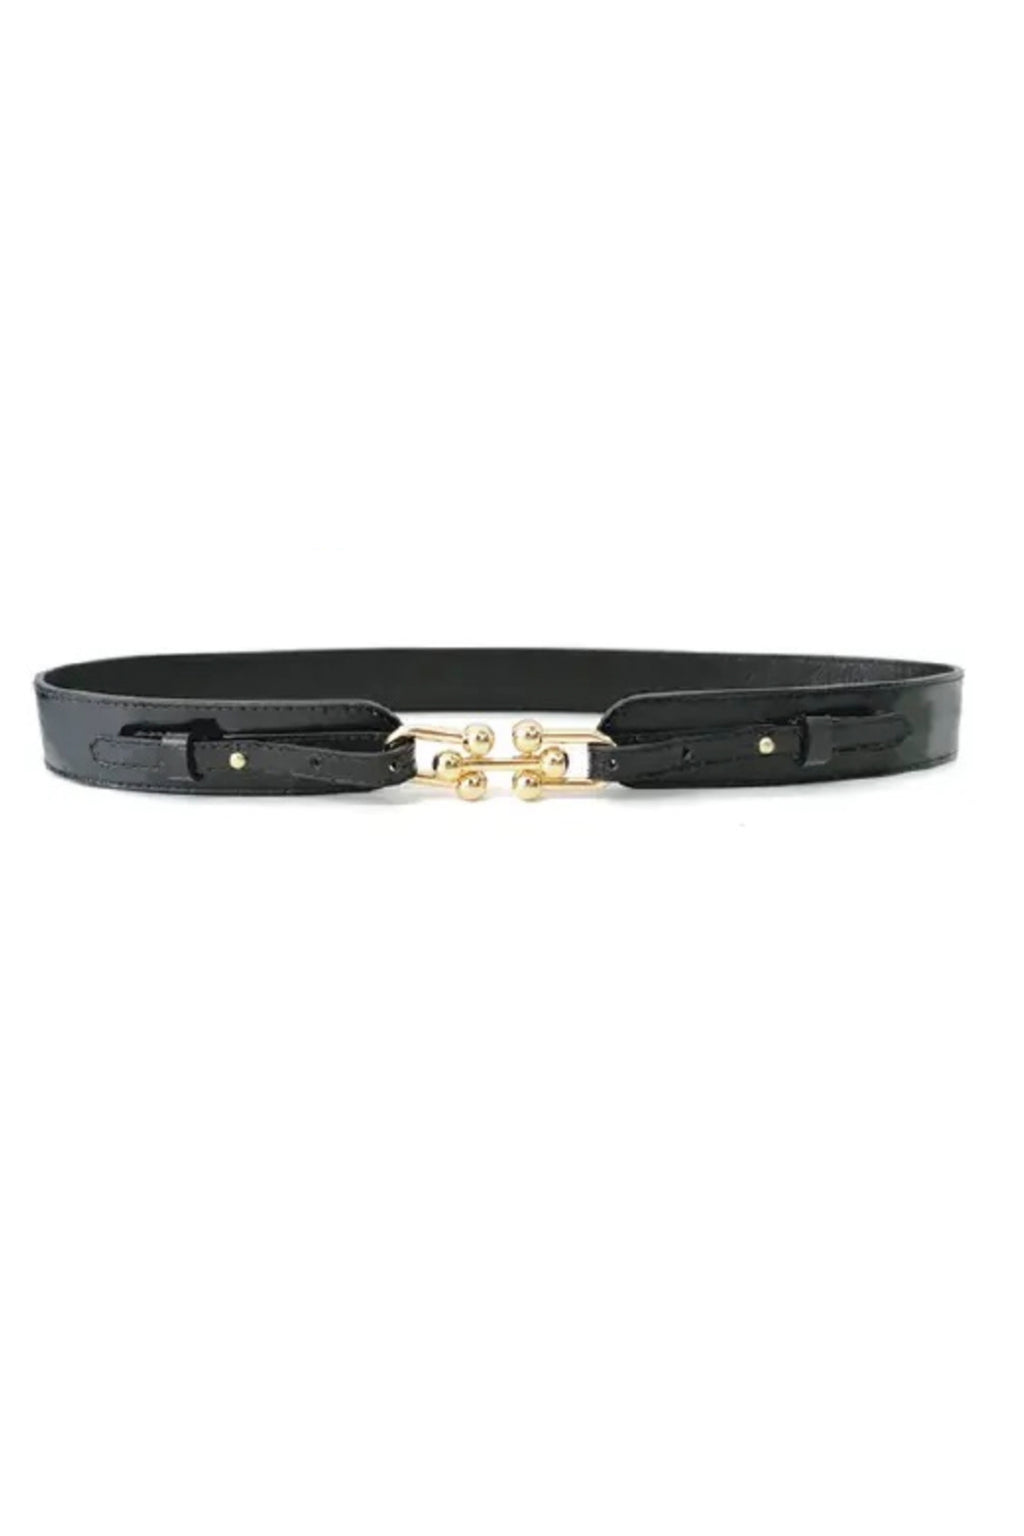 Globe Belt - Black Leather